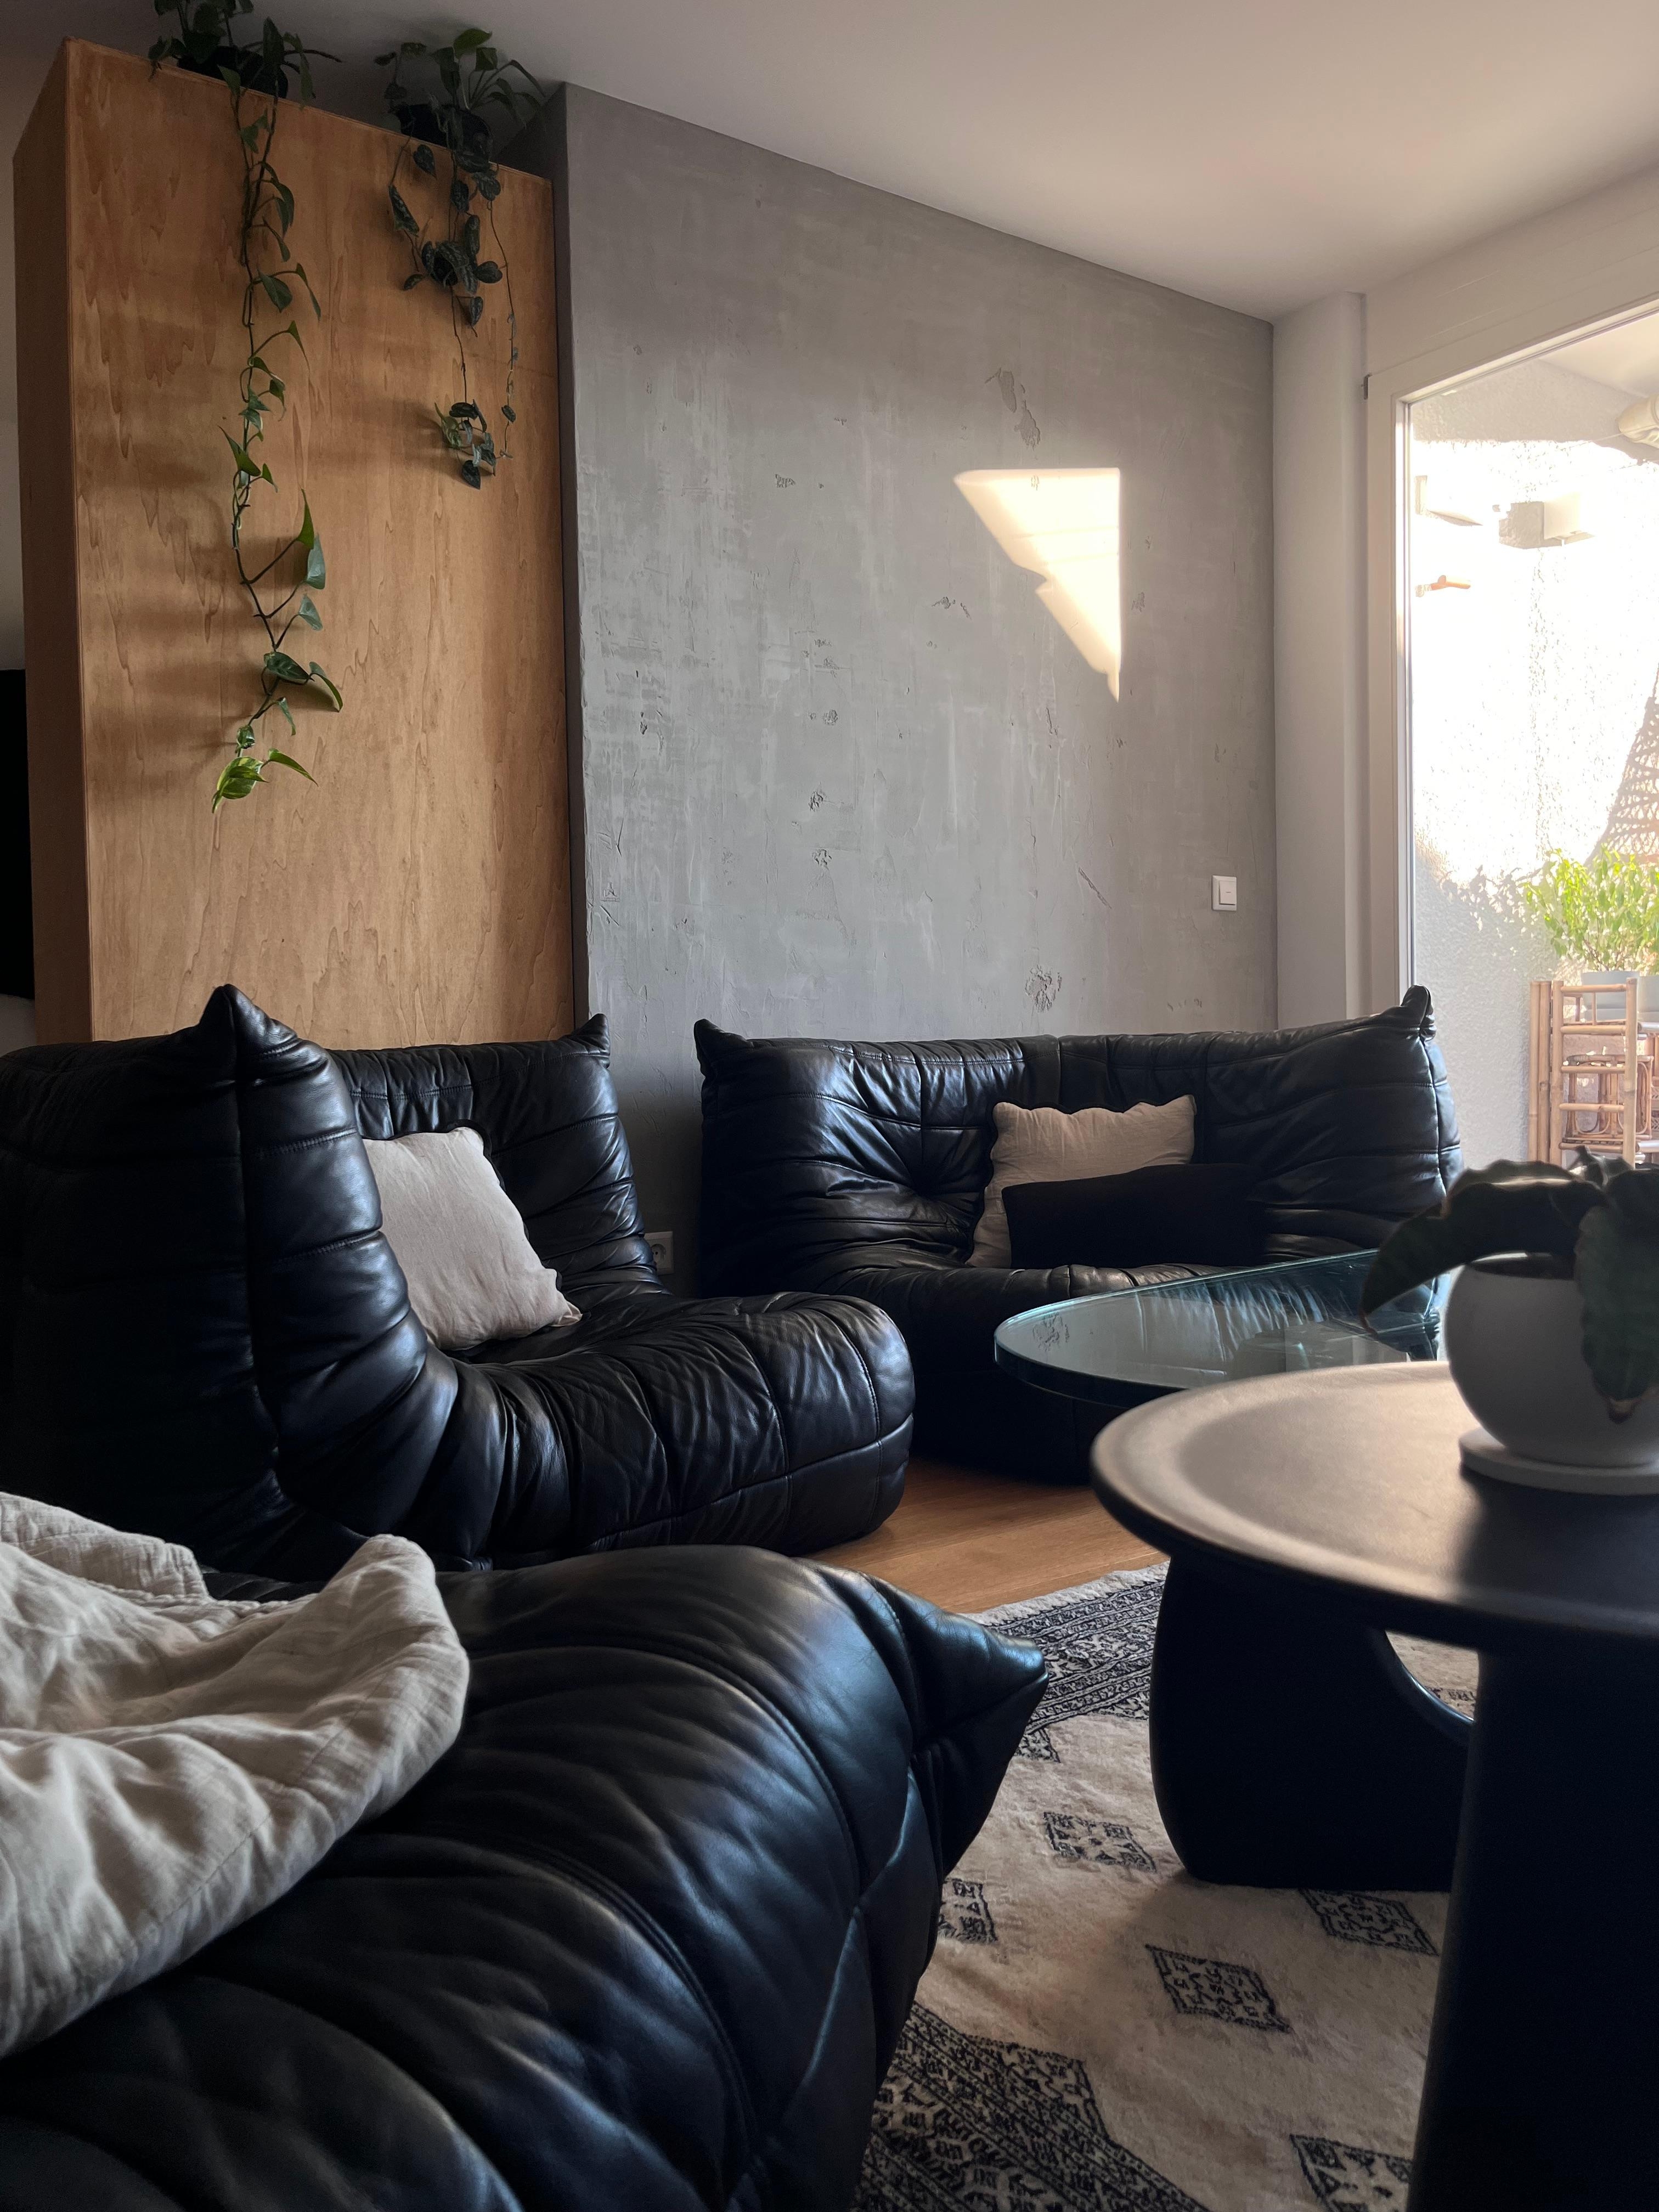 Wohnzimmerliebe 🖤
#couchmagazin #home #livingroom #togo #ligneroset #cozyhome #sofa #couch